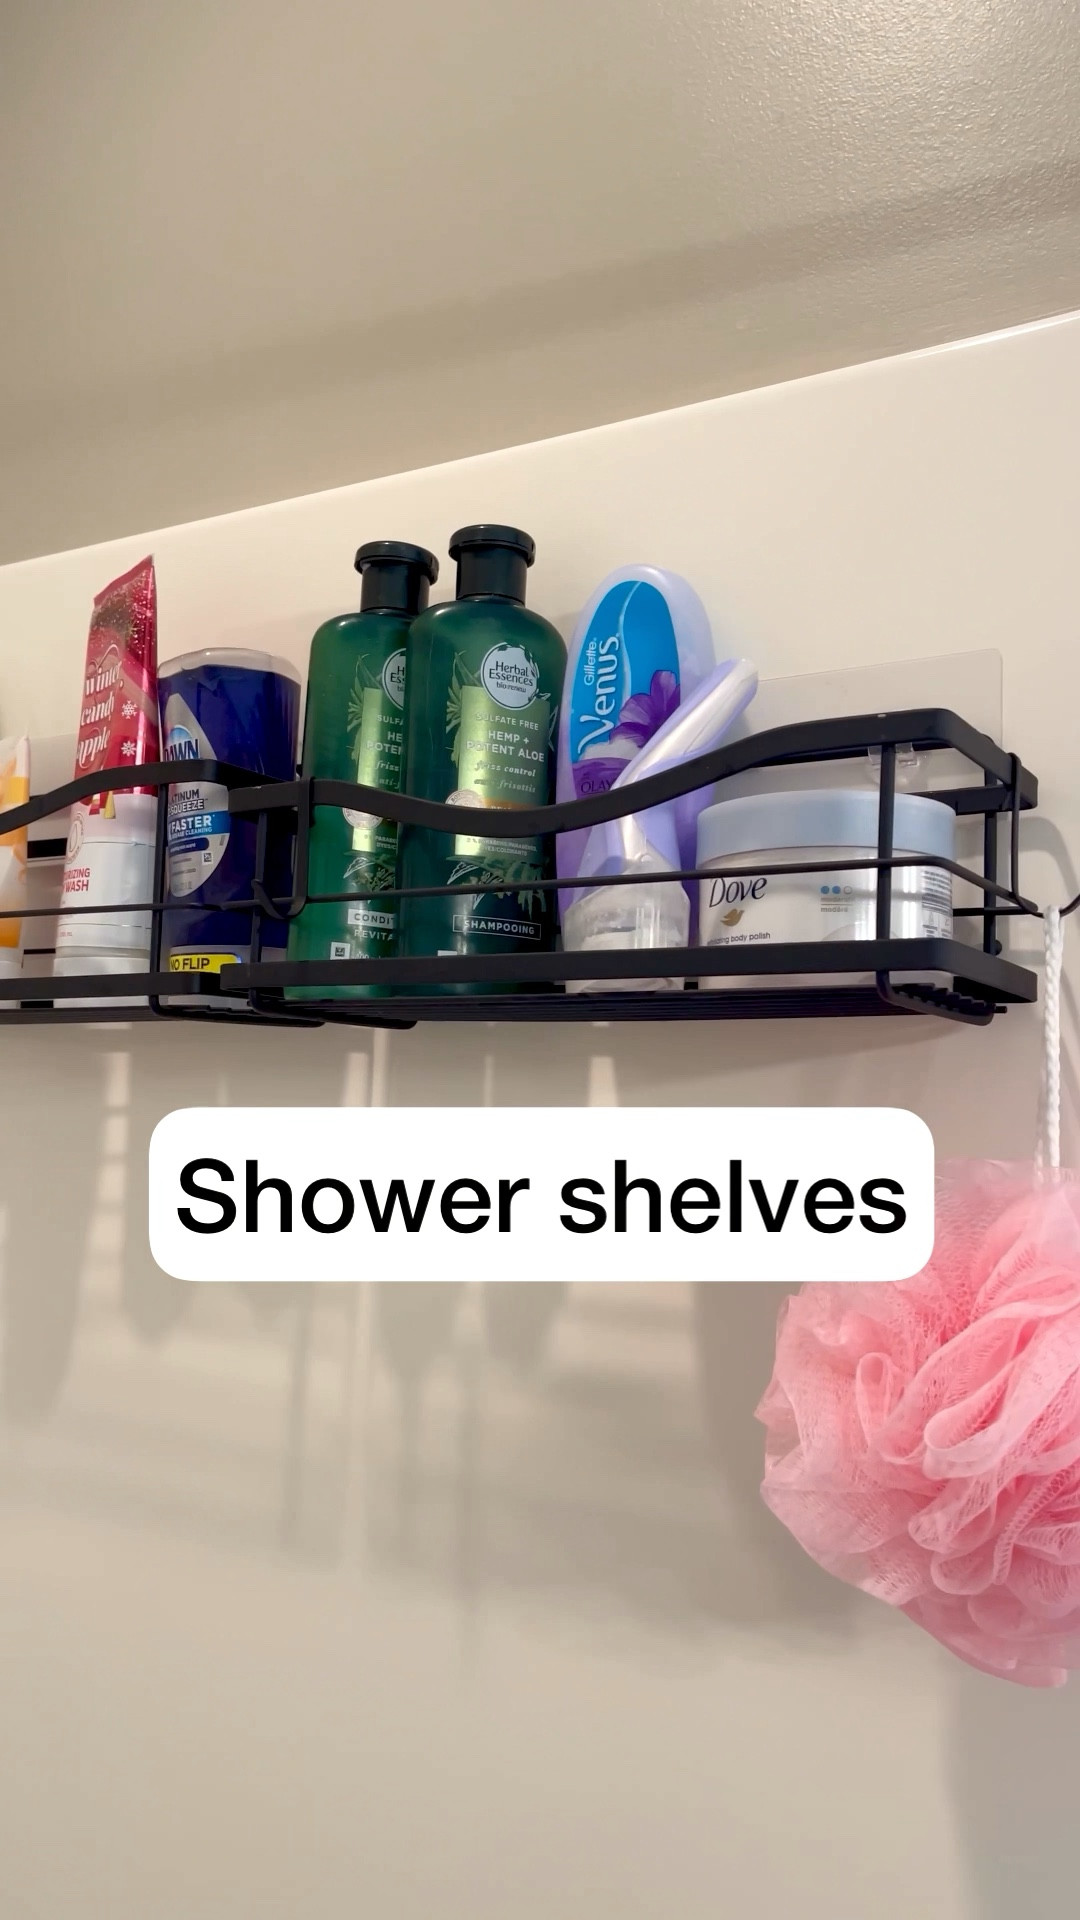 KINCMAX Shower Caddy Bathroom Shelf, No Drilling Traceless Adhesive Bathroom